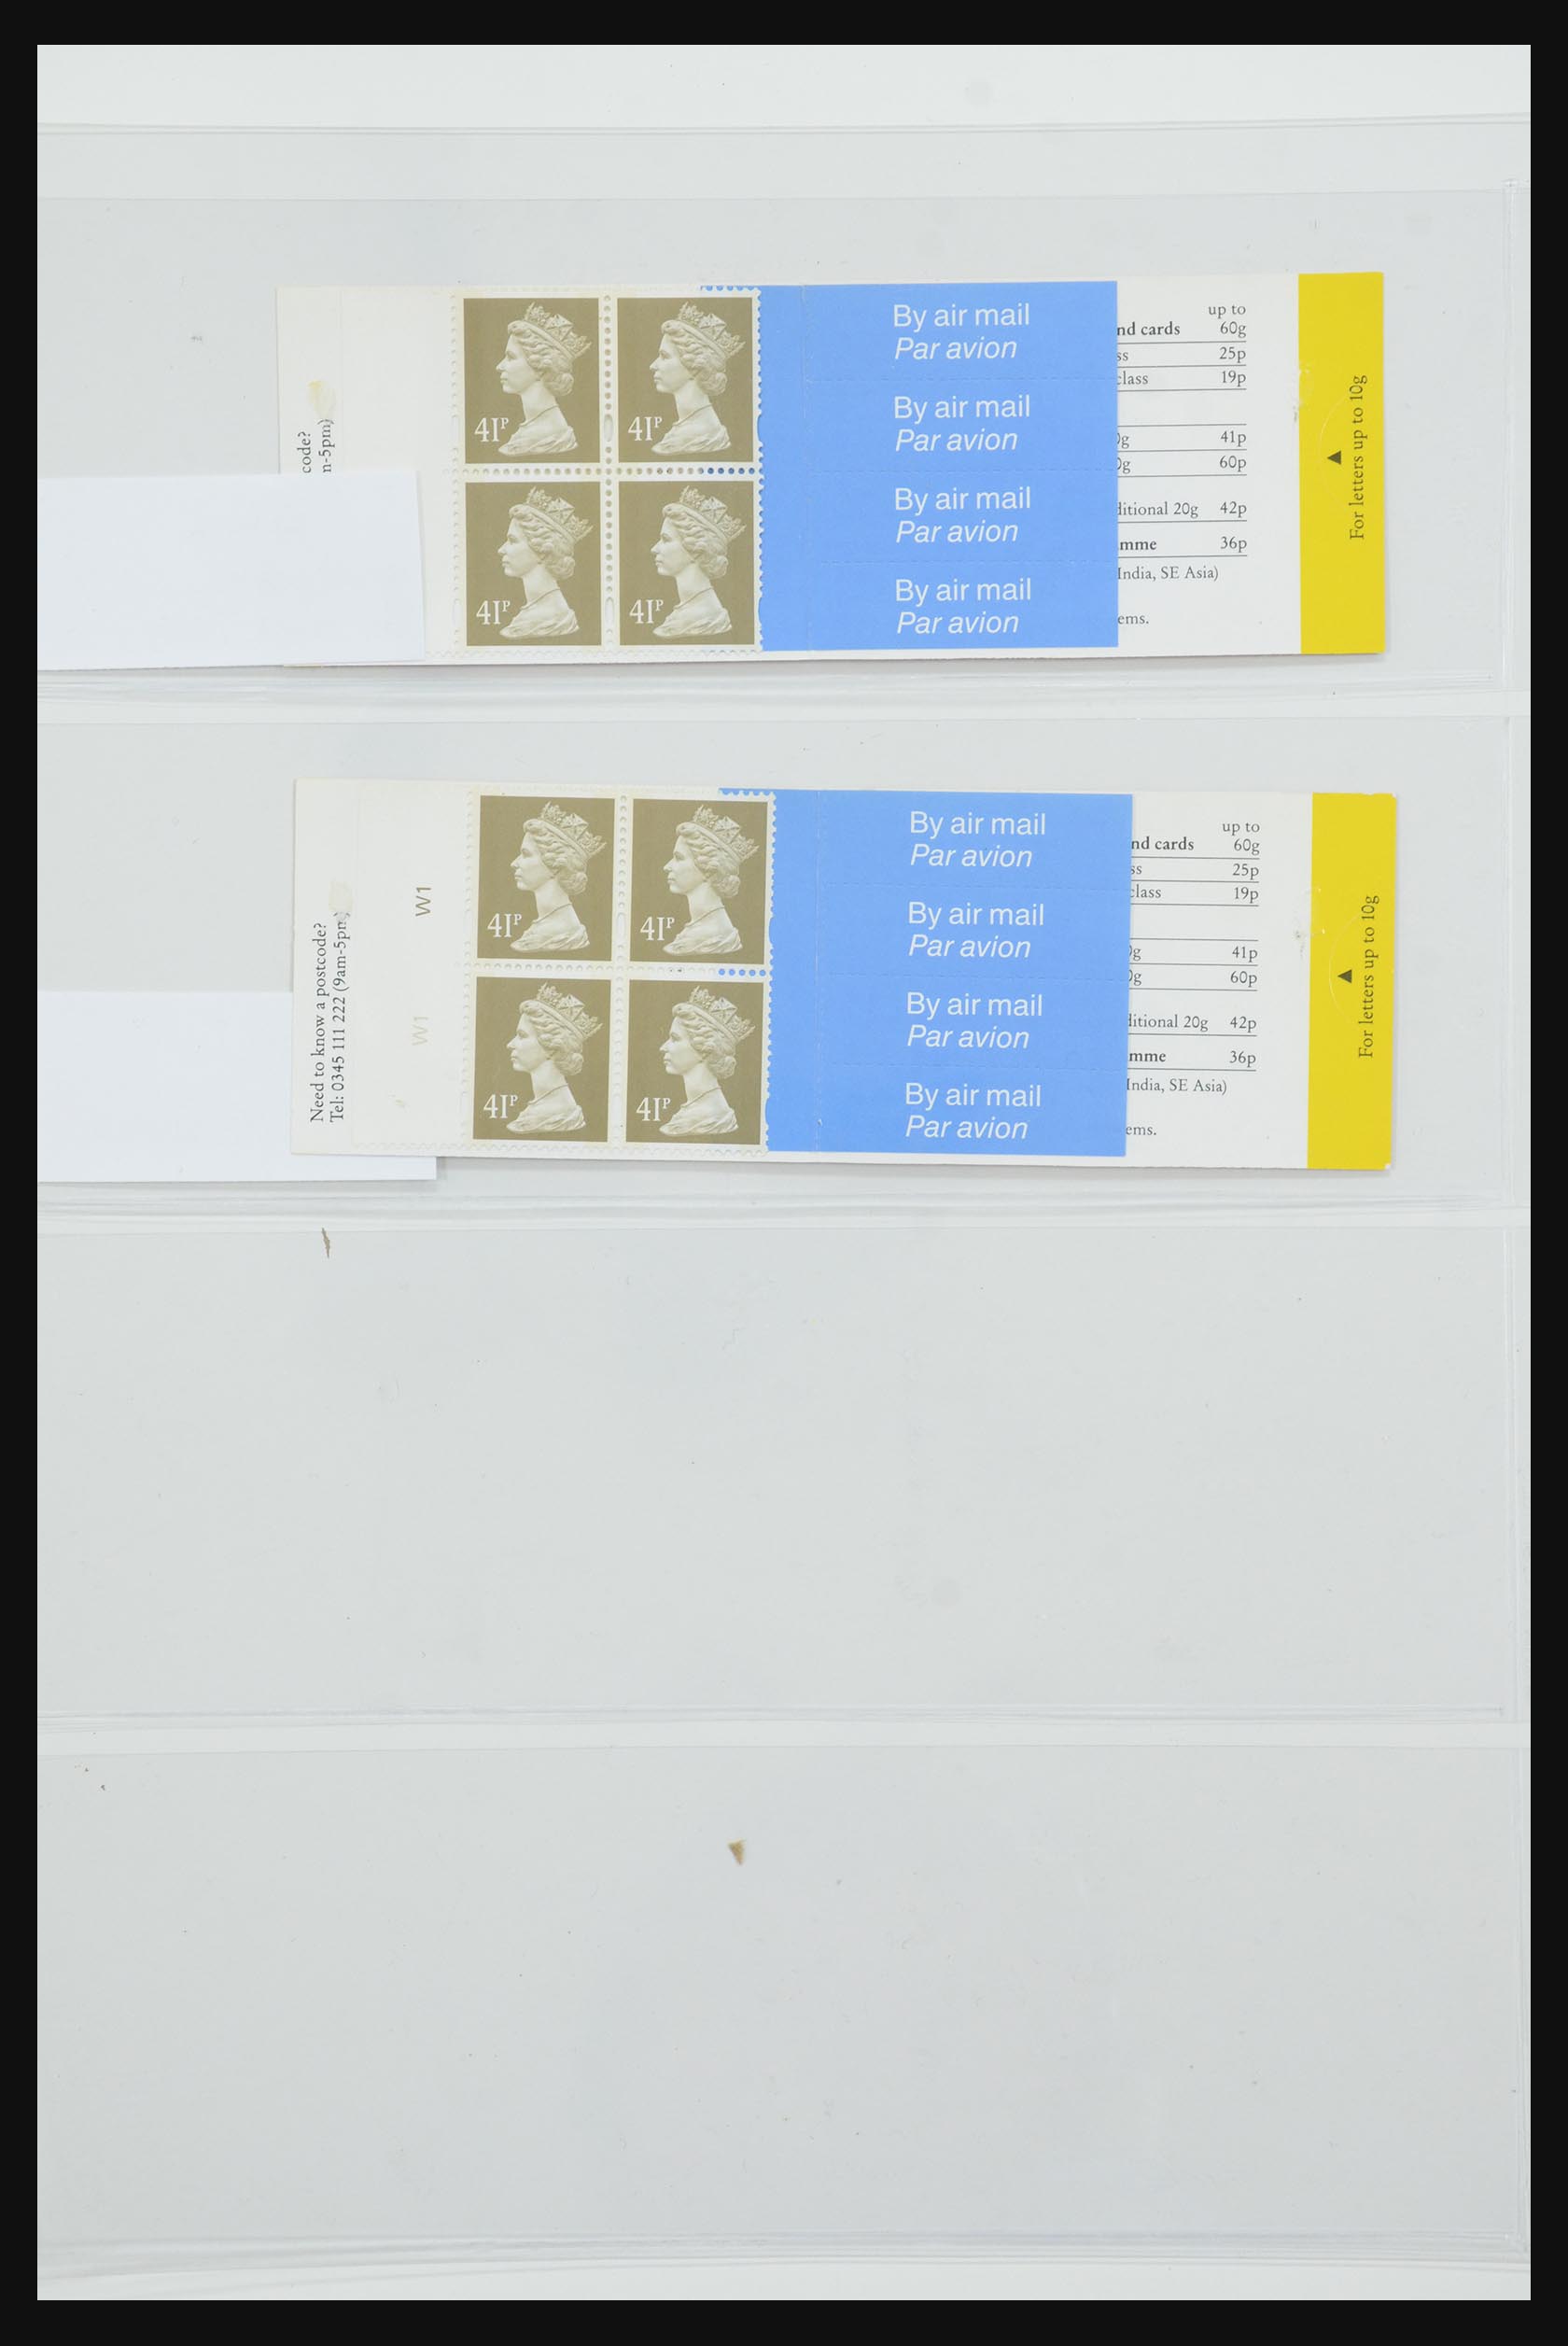 31959 062 - 31959 Great Britain stampbooklets 1987-2016!!